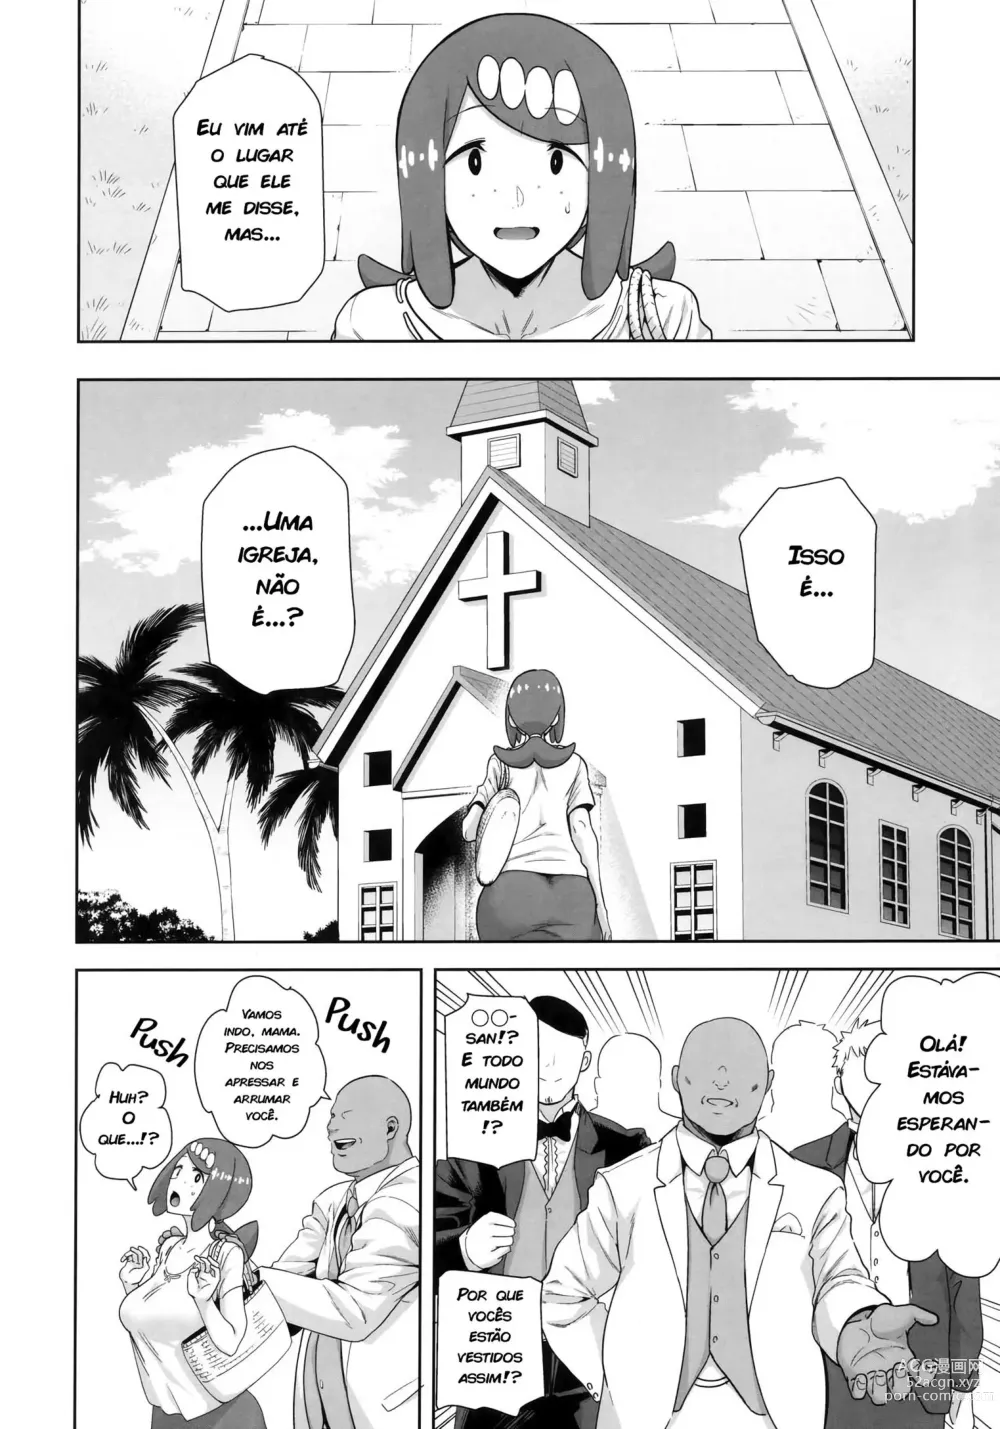 Page 5 of doujinshi 11